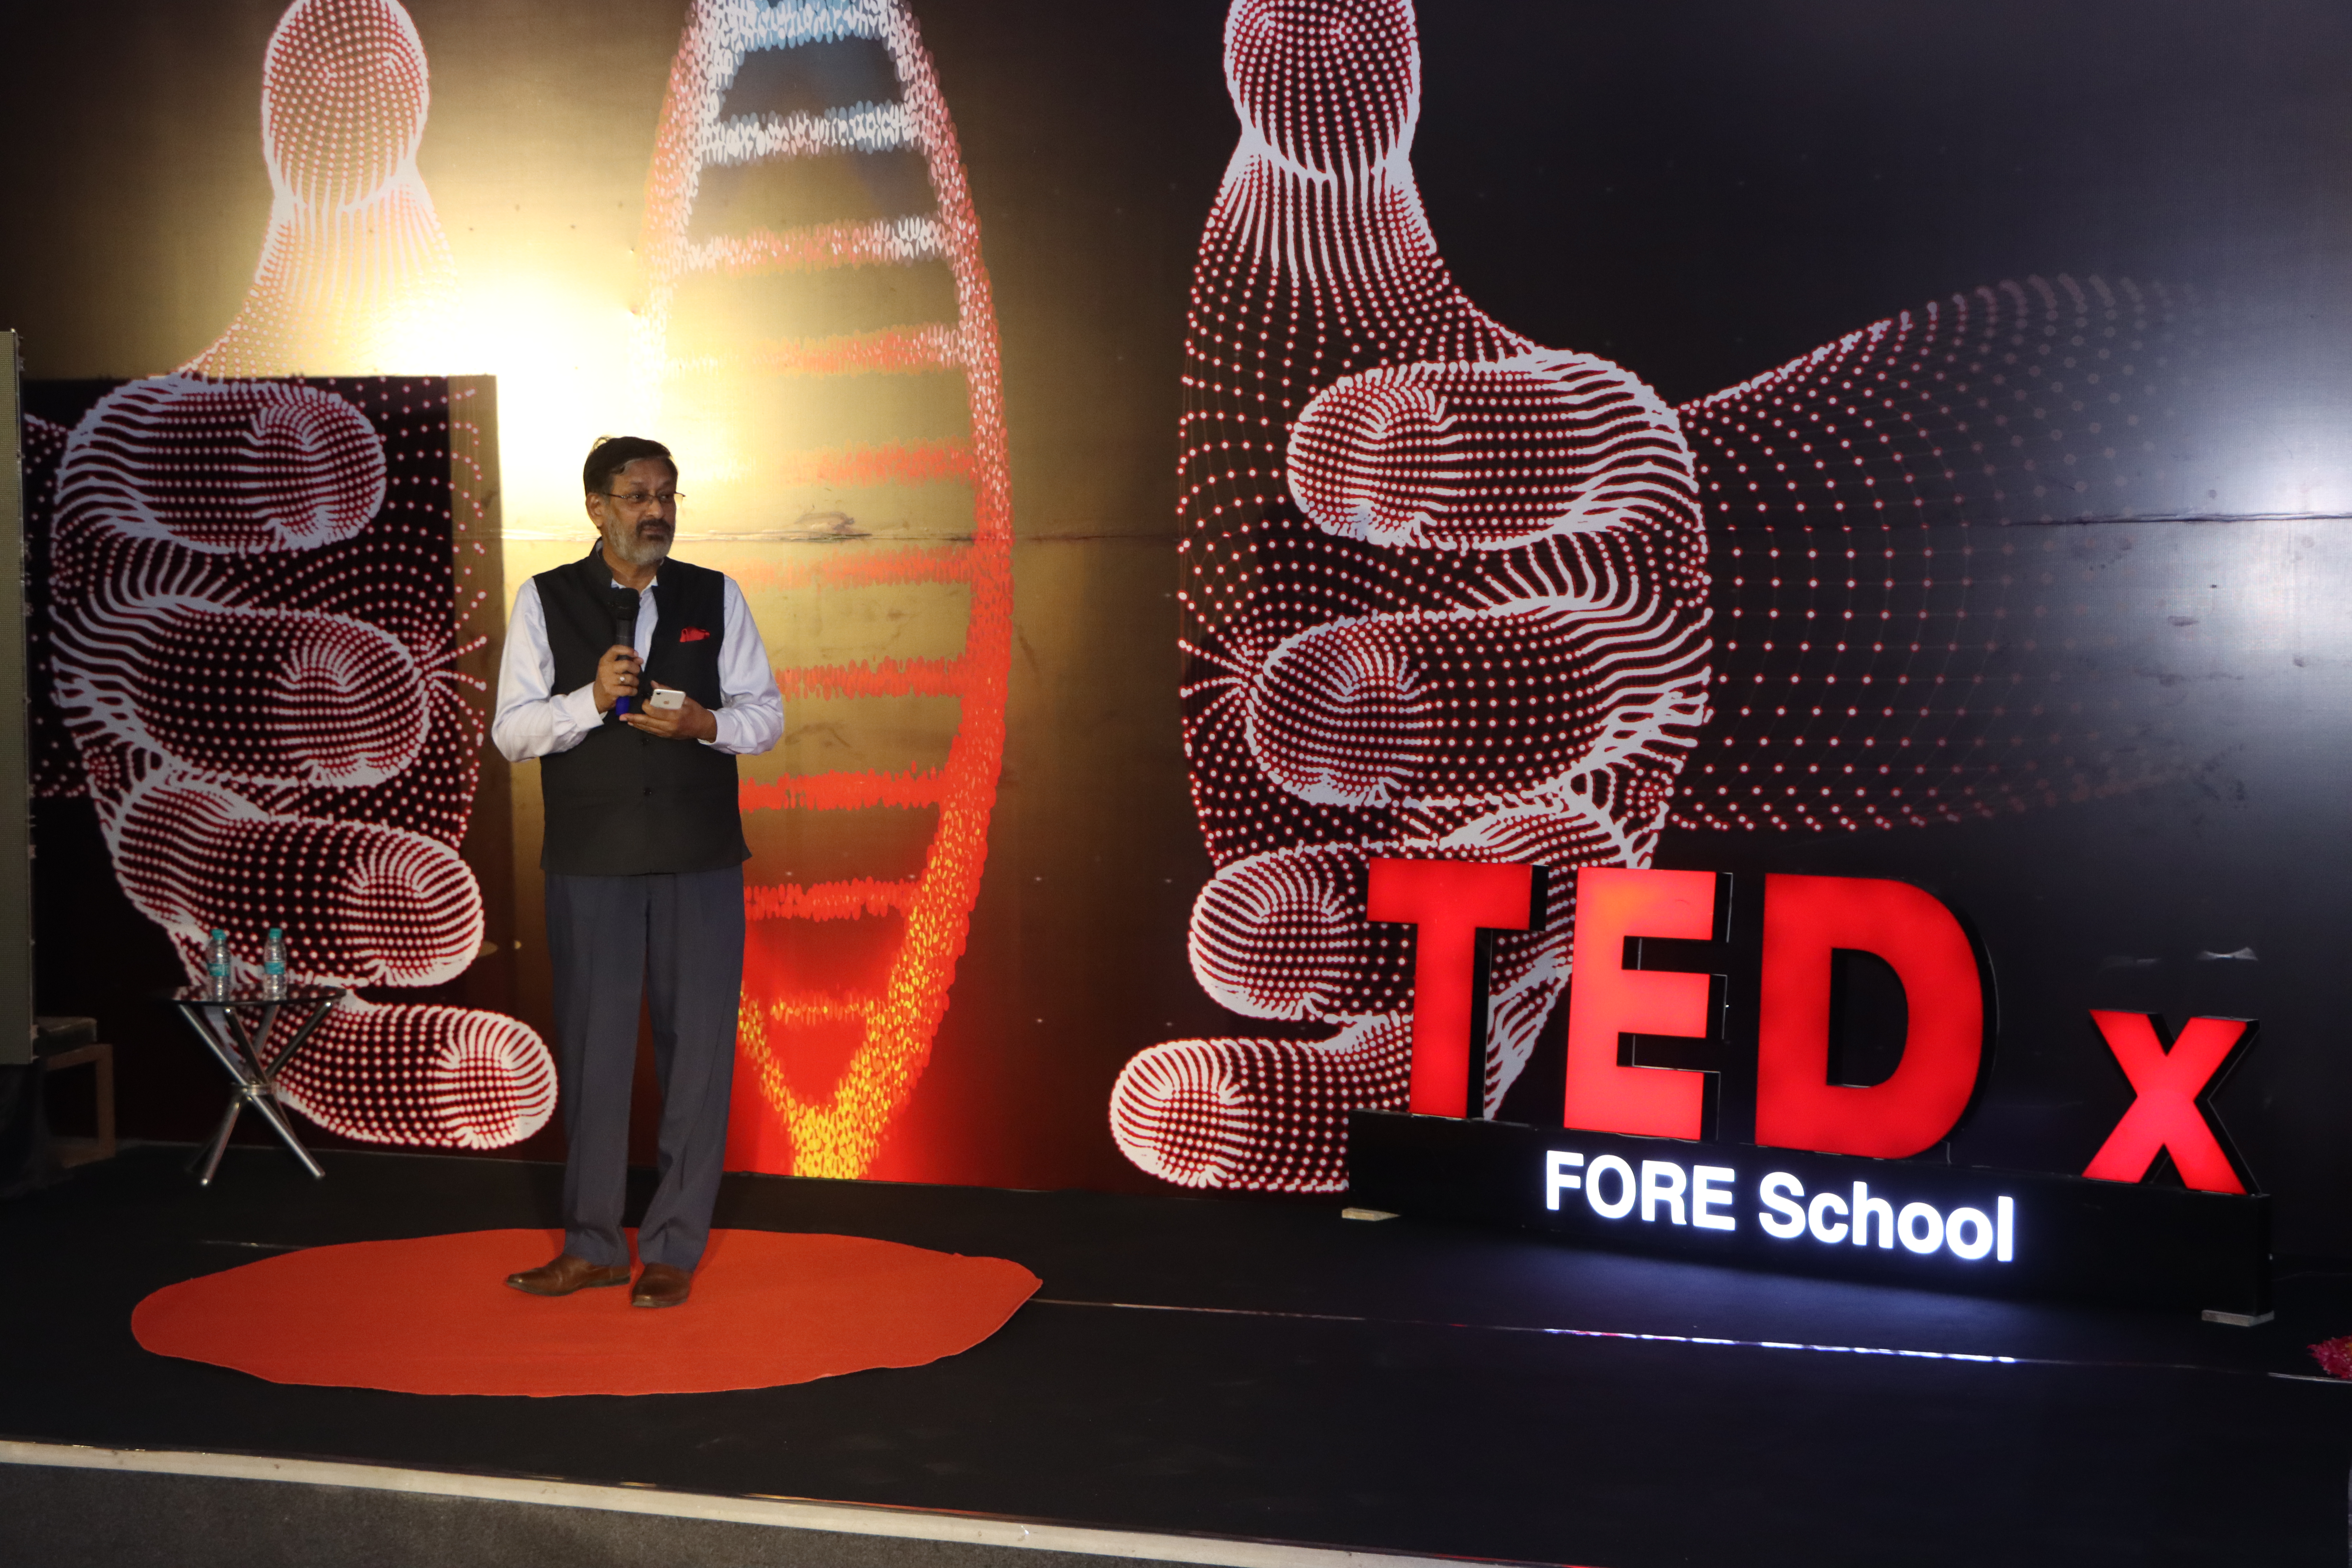 TEDxFORESchool 2022 - Director, Prof. Jitendra K. Das, Addressing